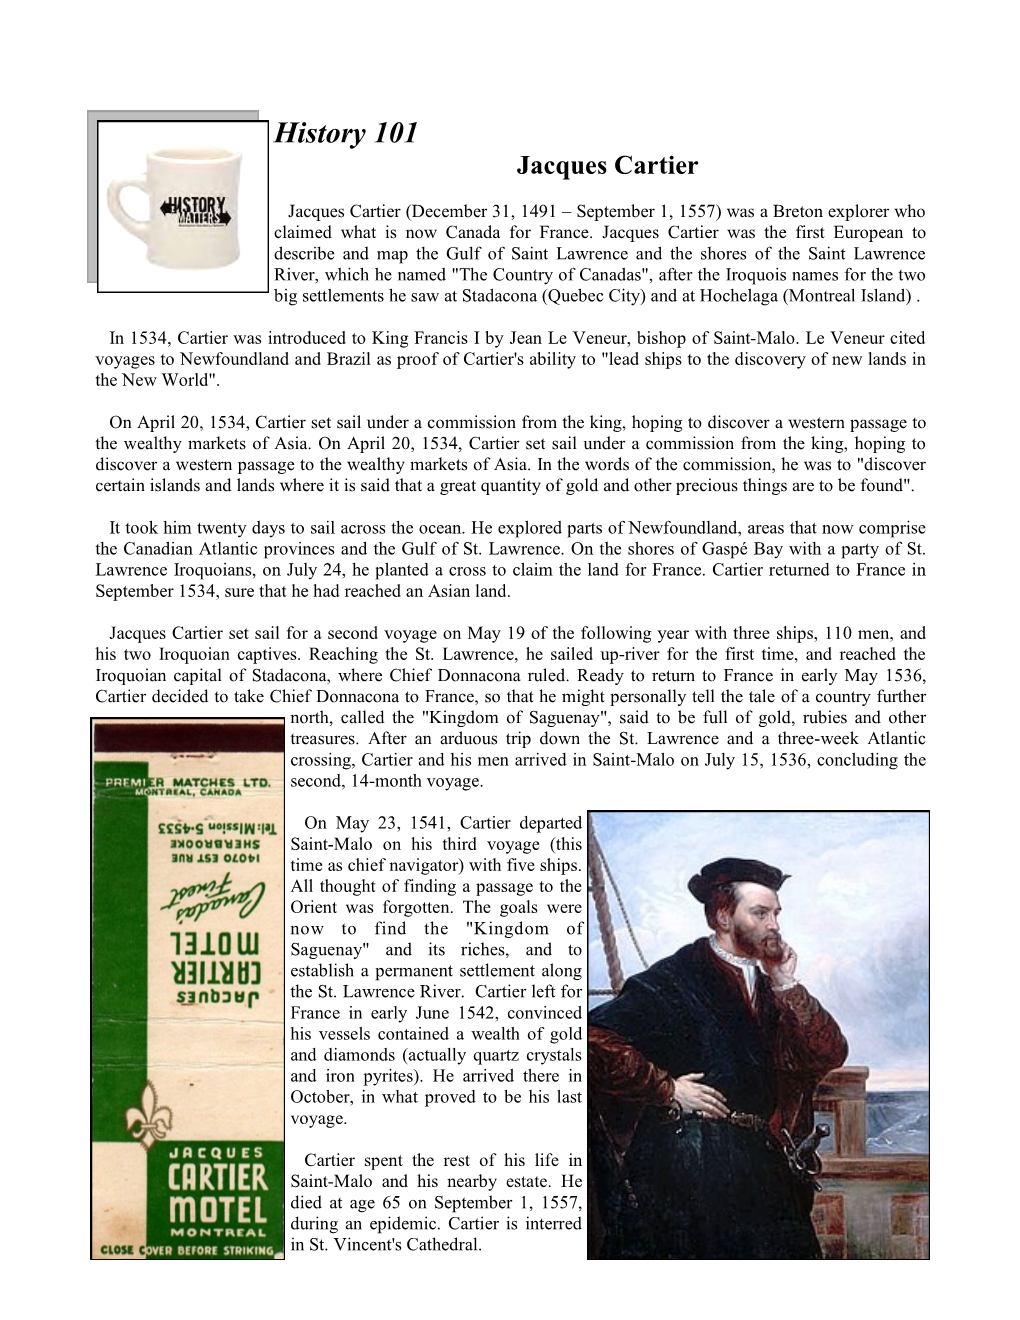 History 101 Jacques Cartier